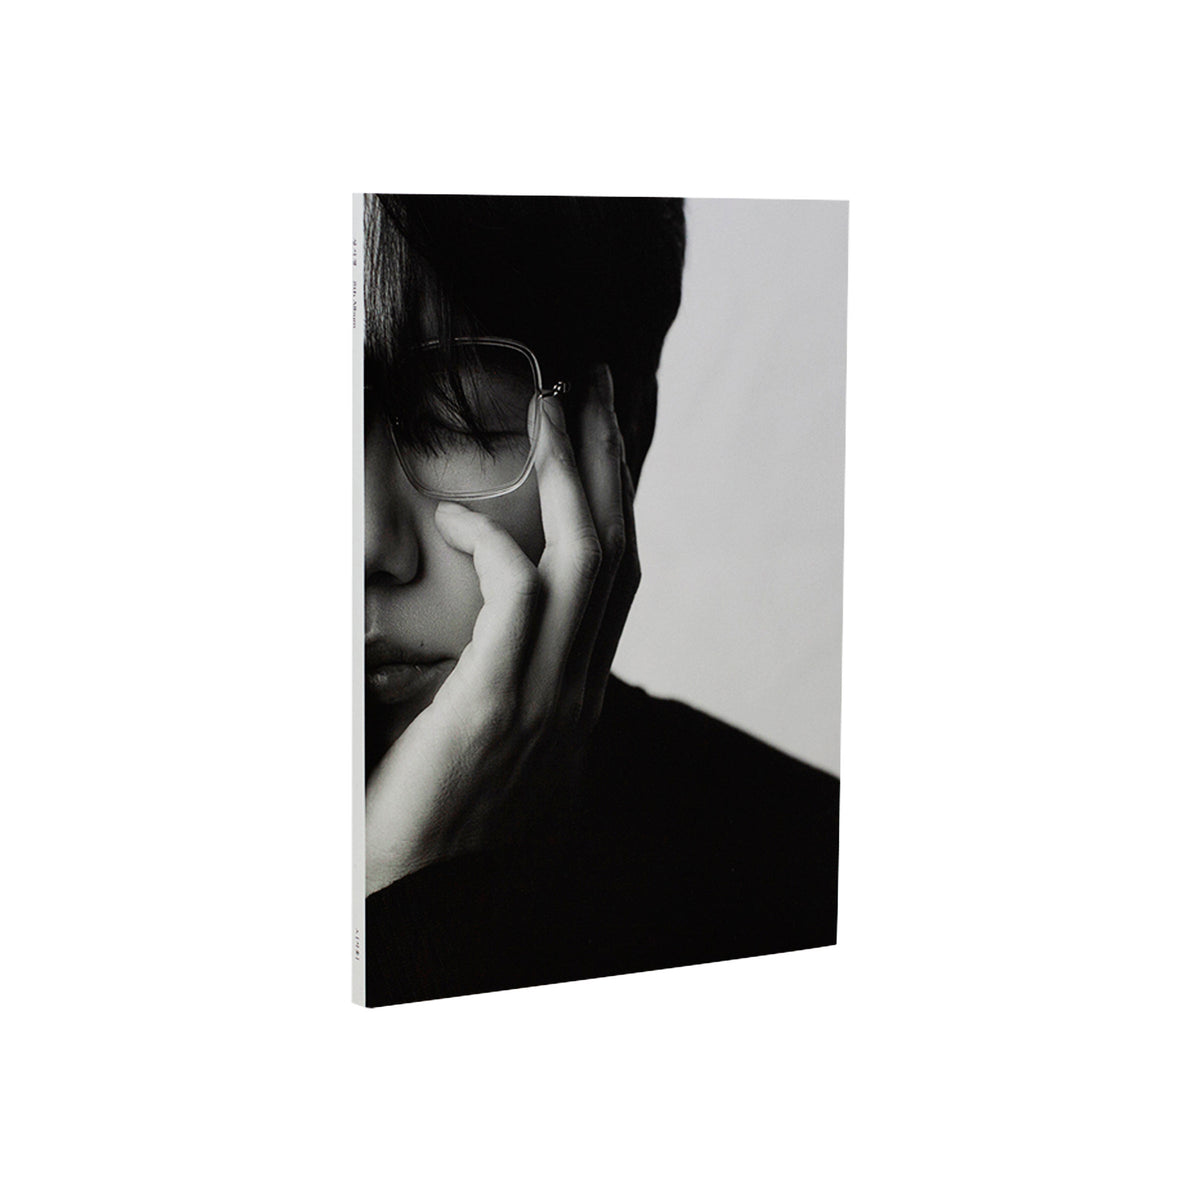 Sung Si Kyung - Siot 8th Album main image 2